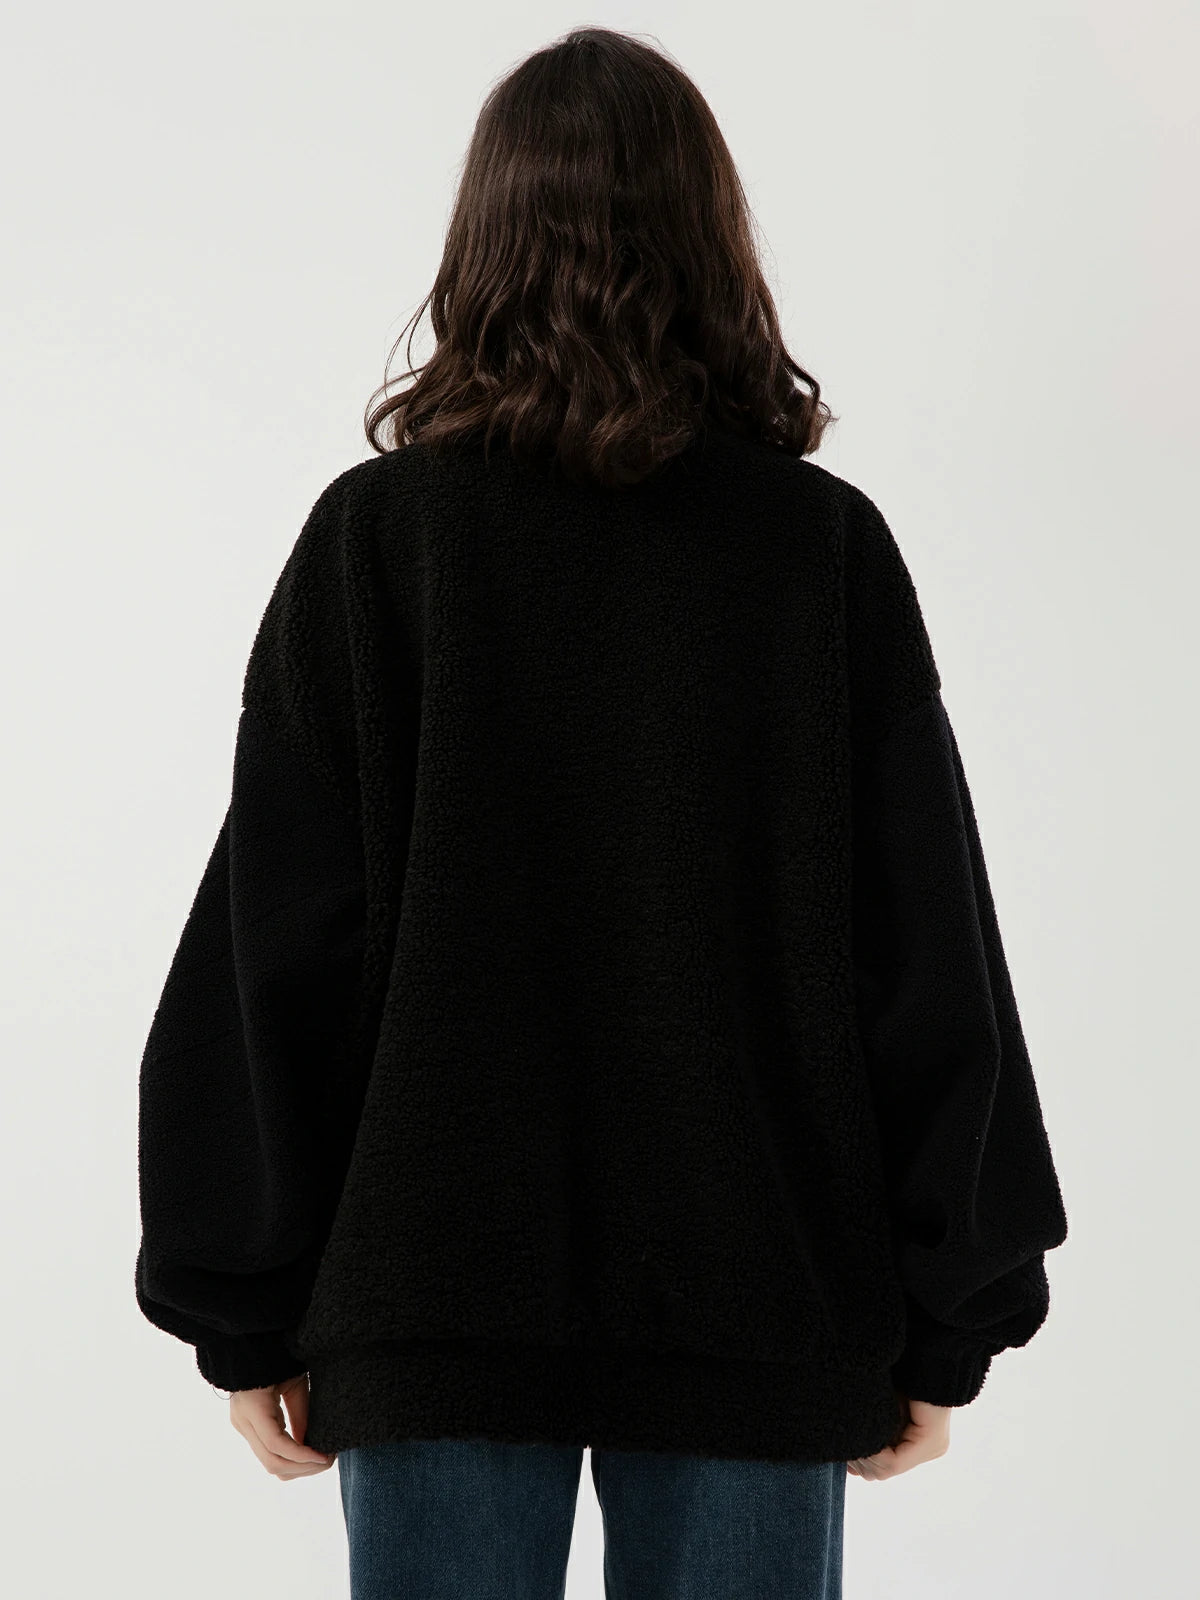 Staying warm and stylish: the charm of a black fleece zip jacket